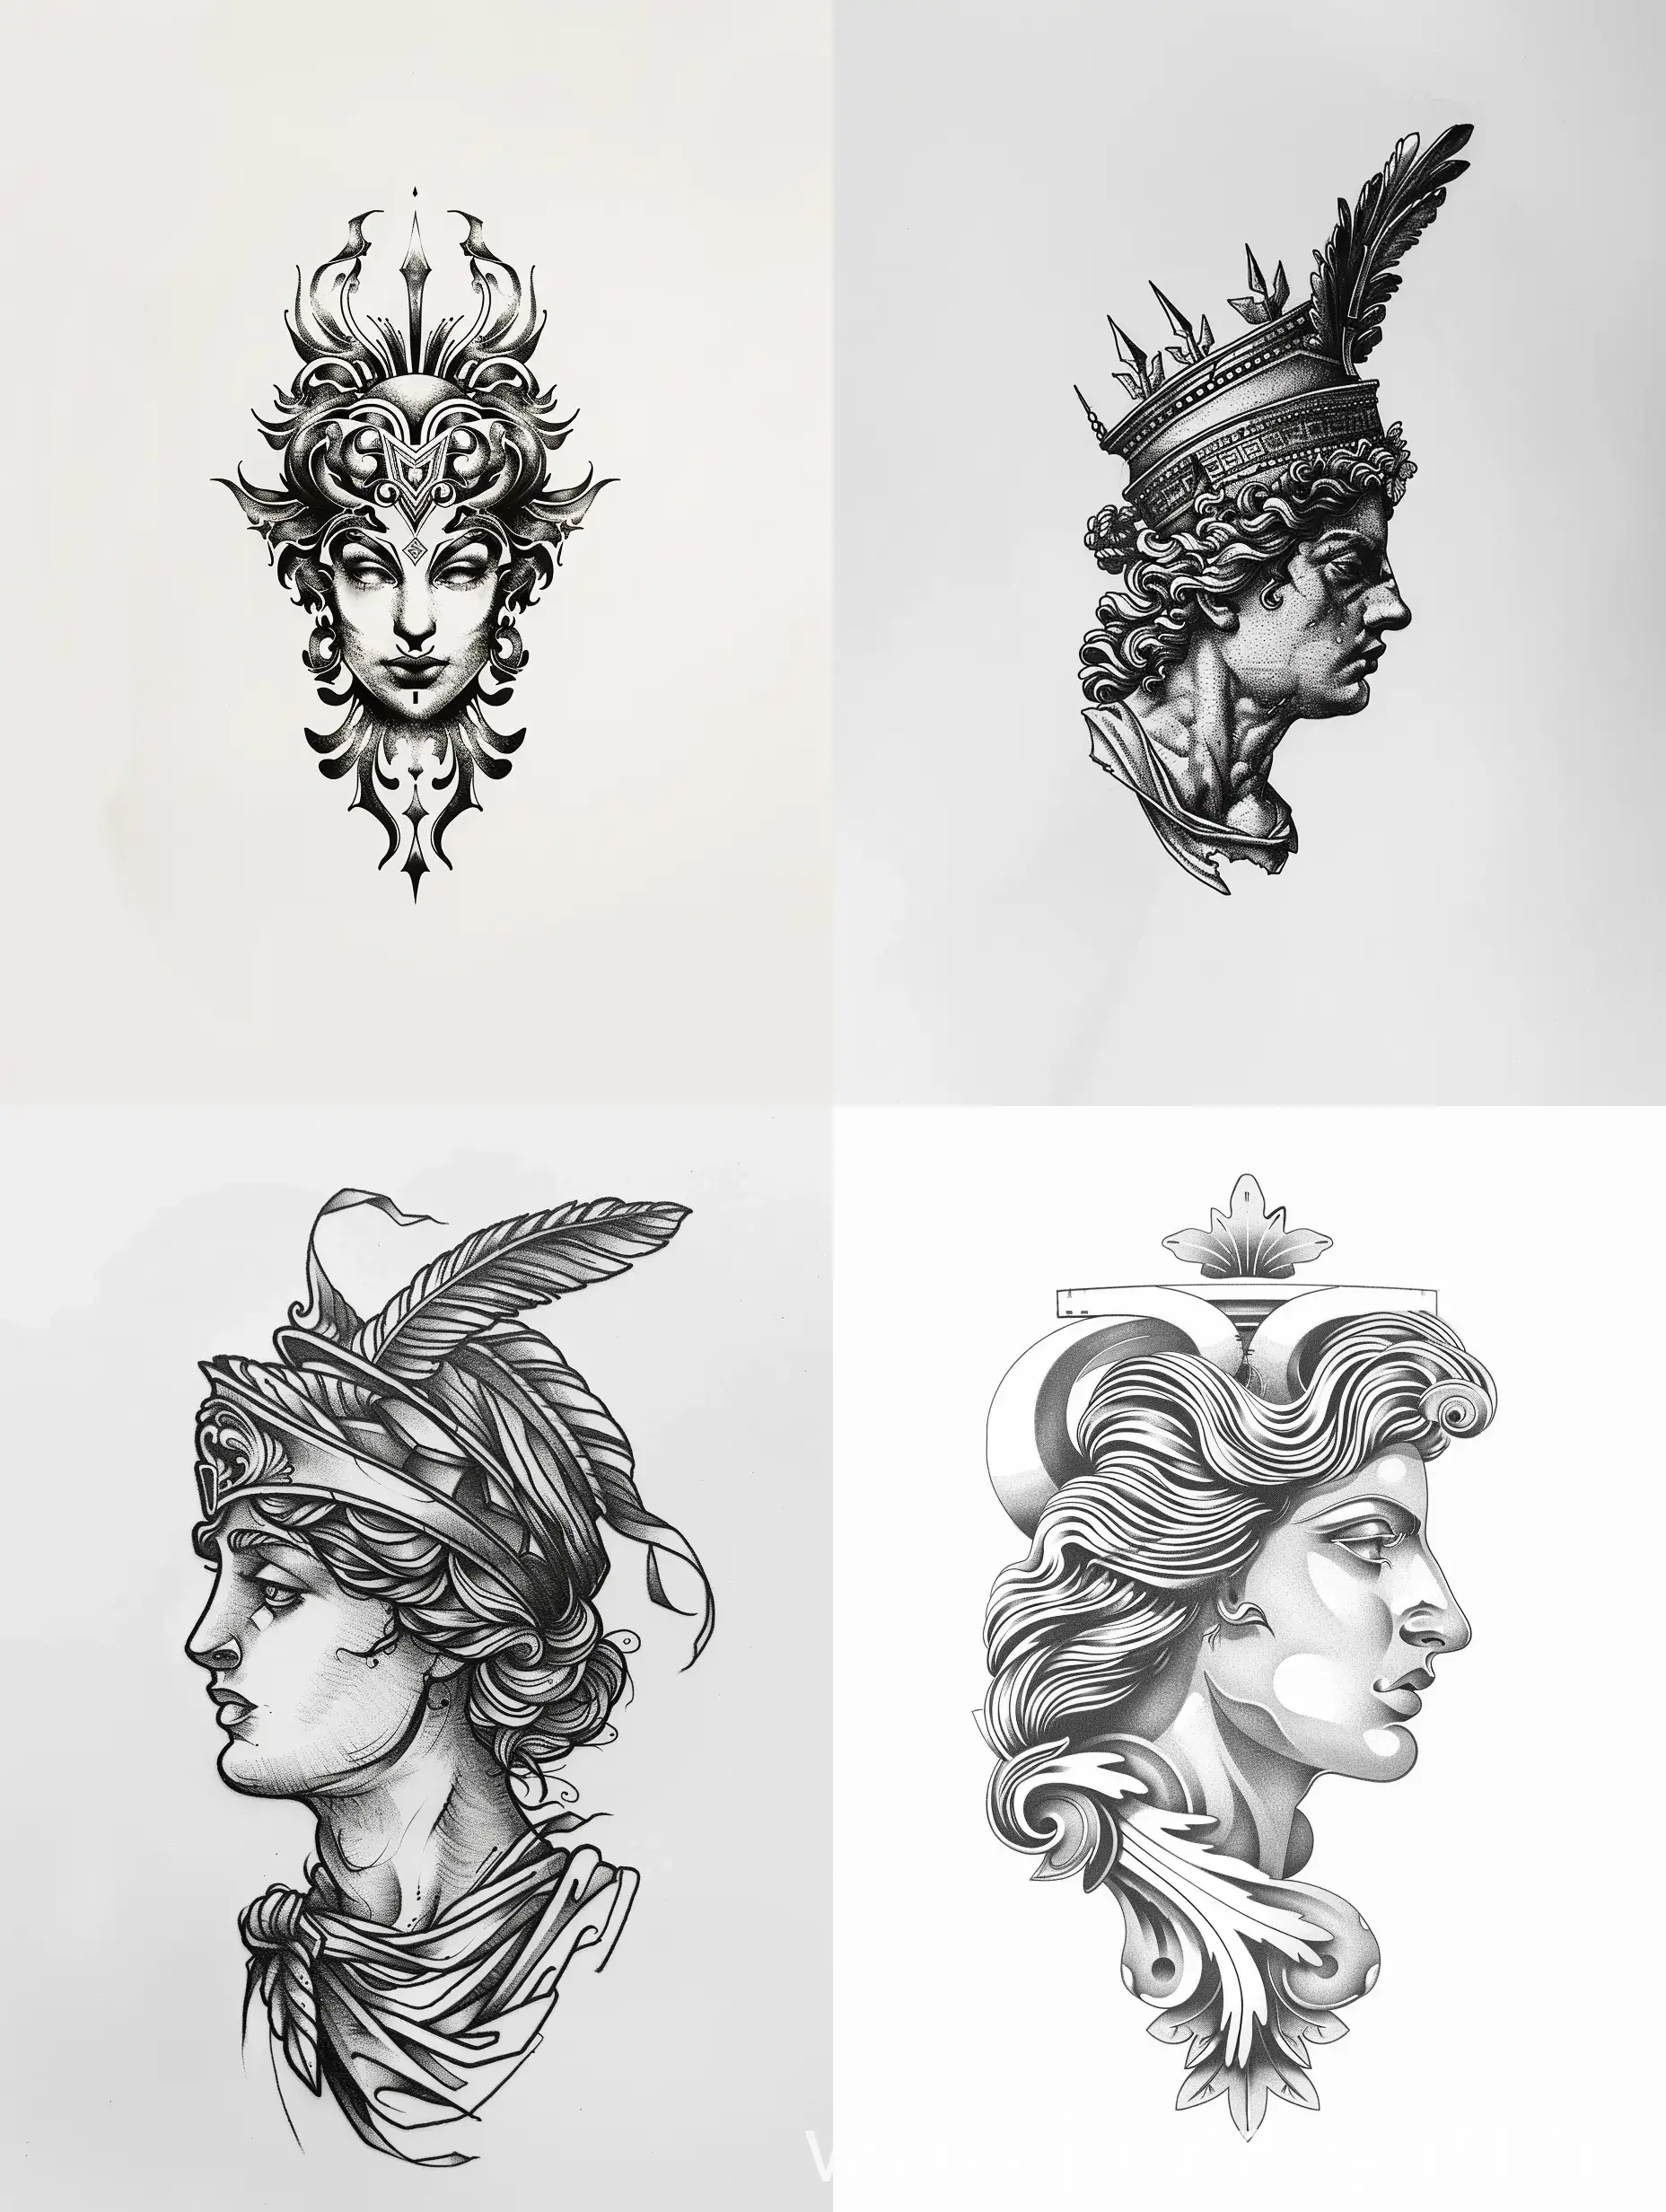 Minimalist-Hera-Tattoo-Design-Sketch-on-White-Background-with-Symmetry